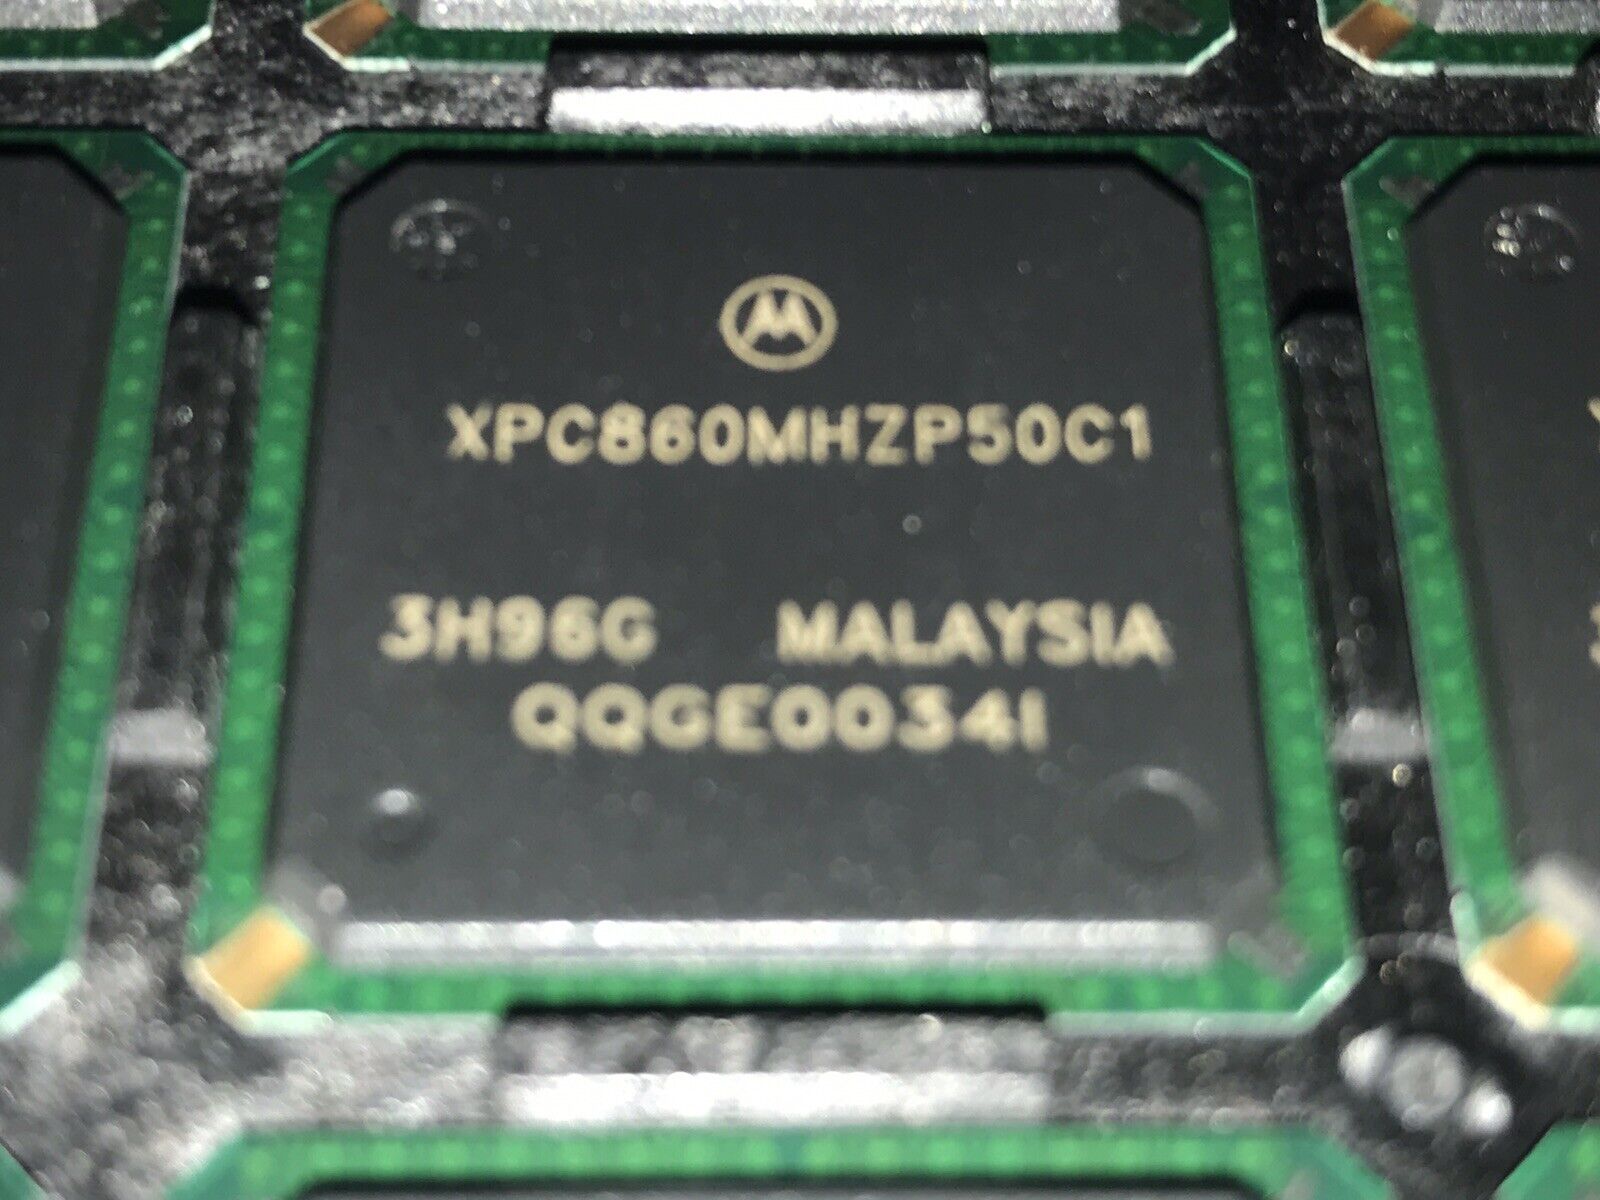 XPC860MHZP50C1 Integrated Circuit